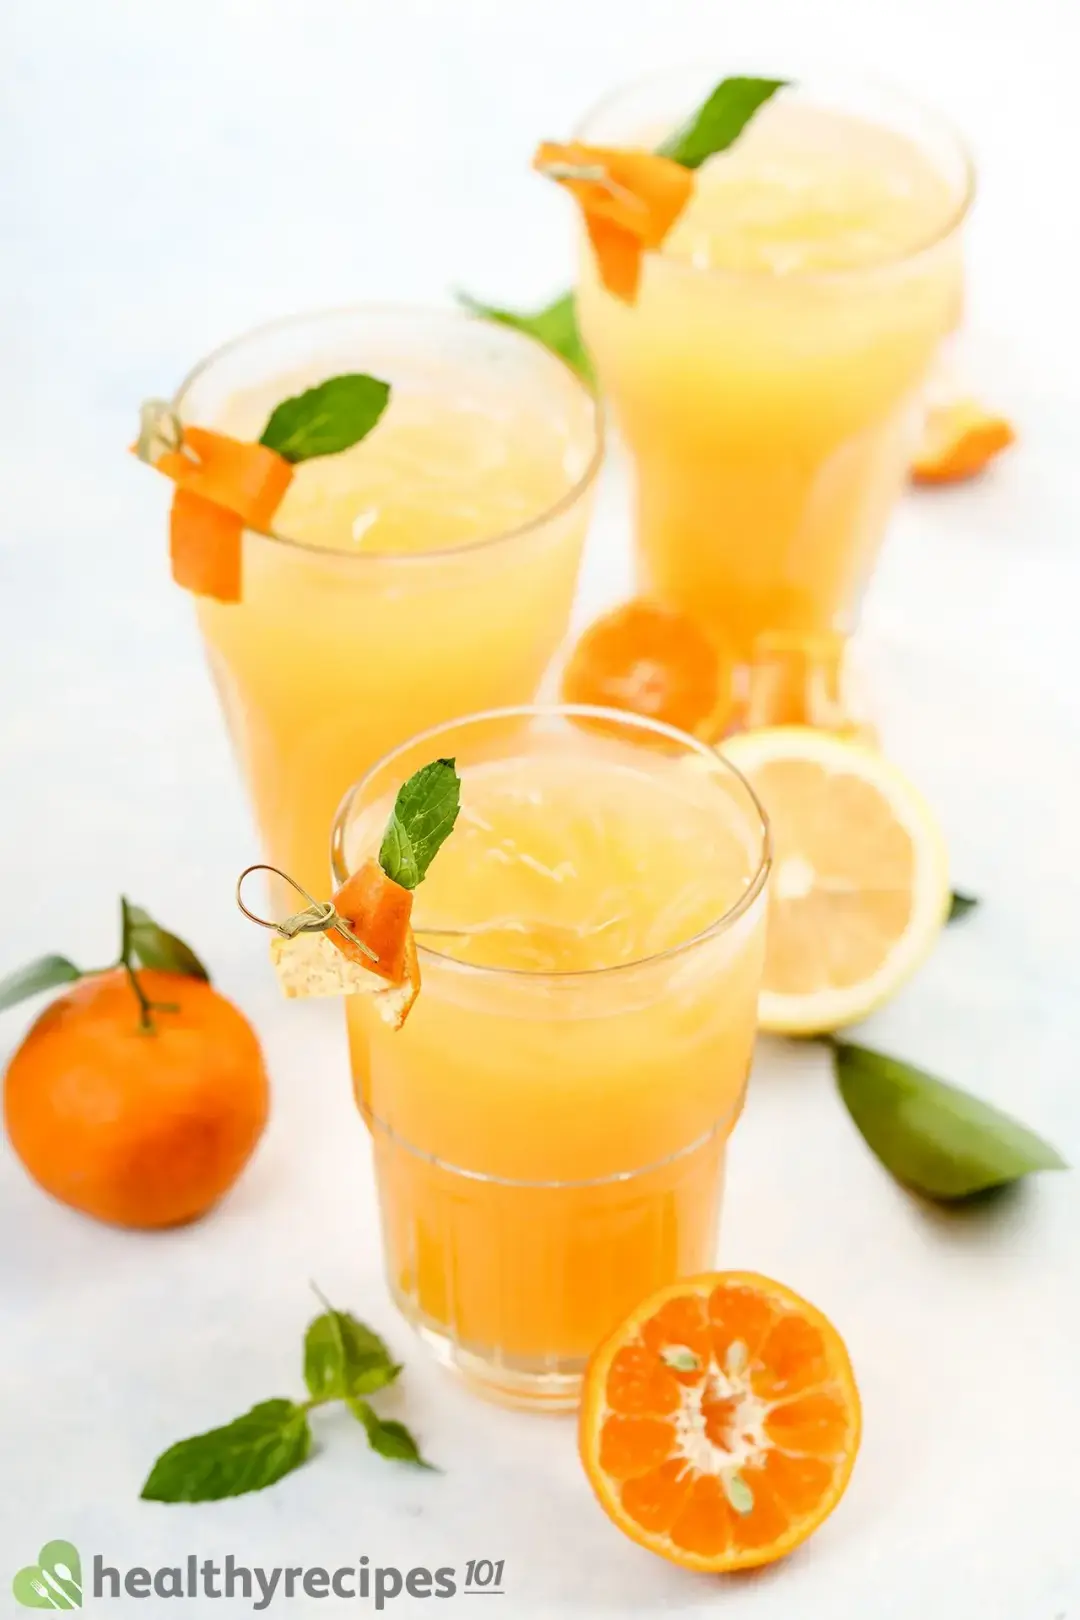 Storage and Freezing the Leftover Tangerine Juice